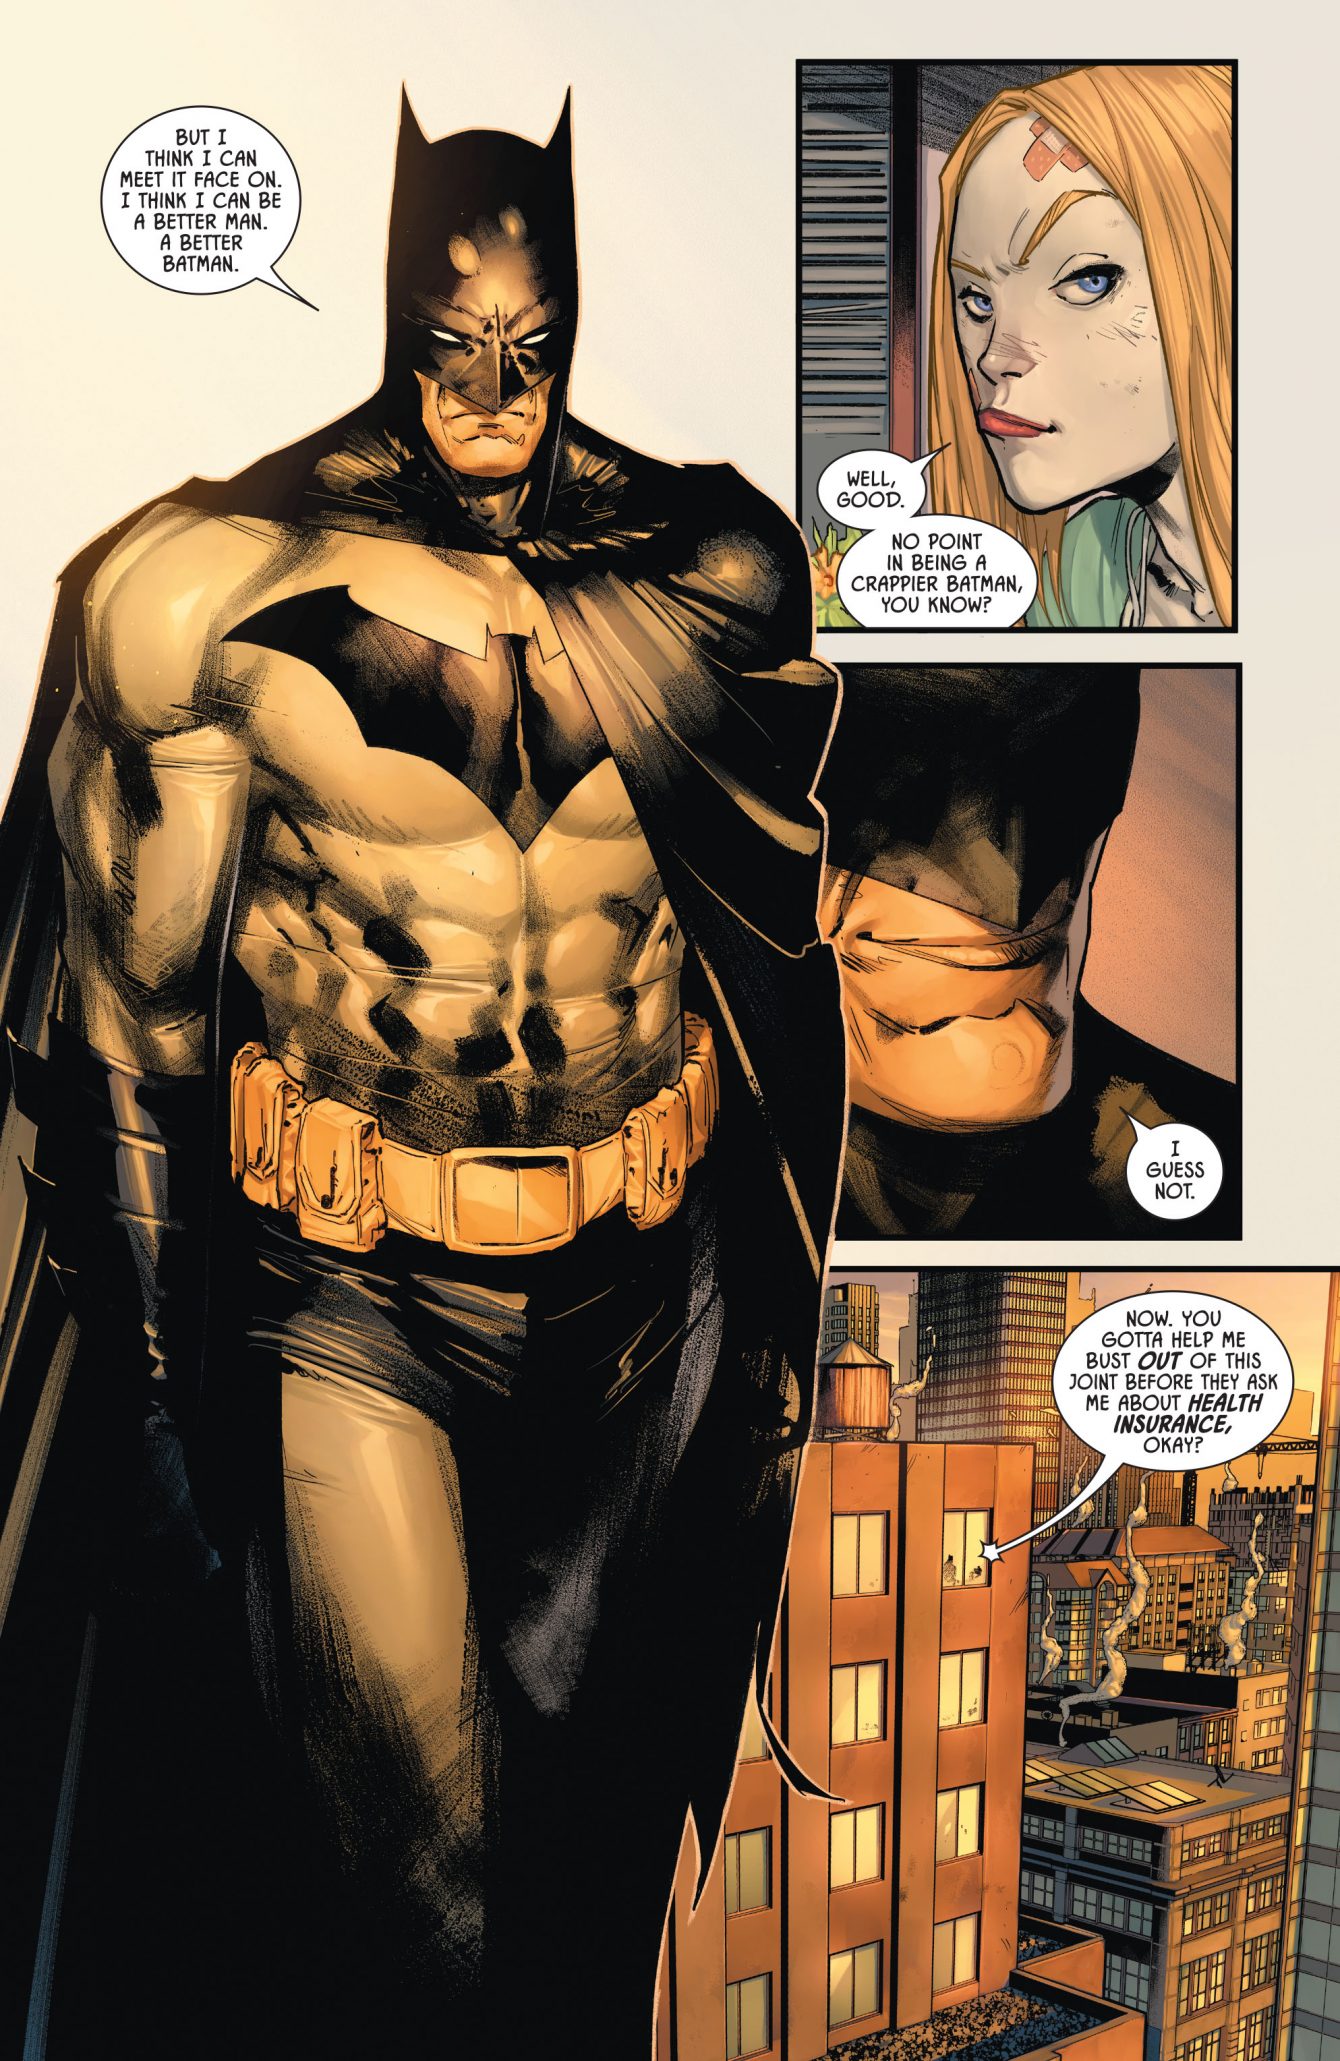 Batman Writer James Tynion IV Explains Why He Chose To Have Bruce Wayne